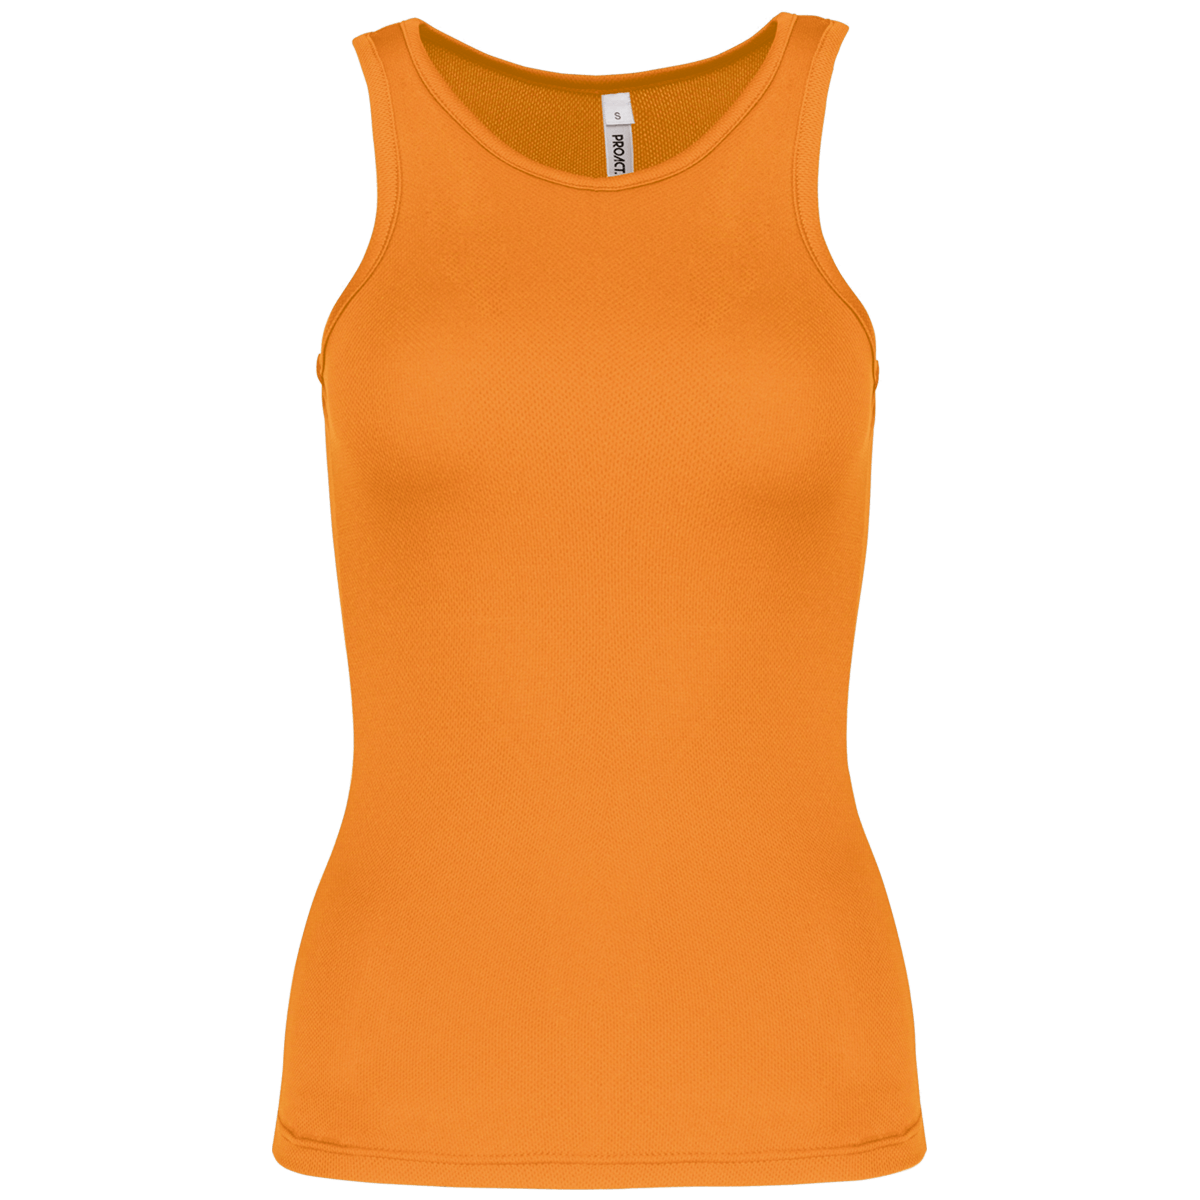 Women's Sports Tank Top Fluorescent Orange